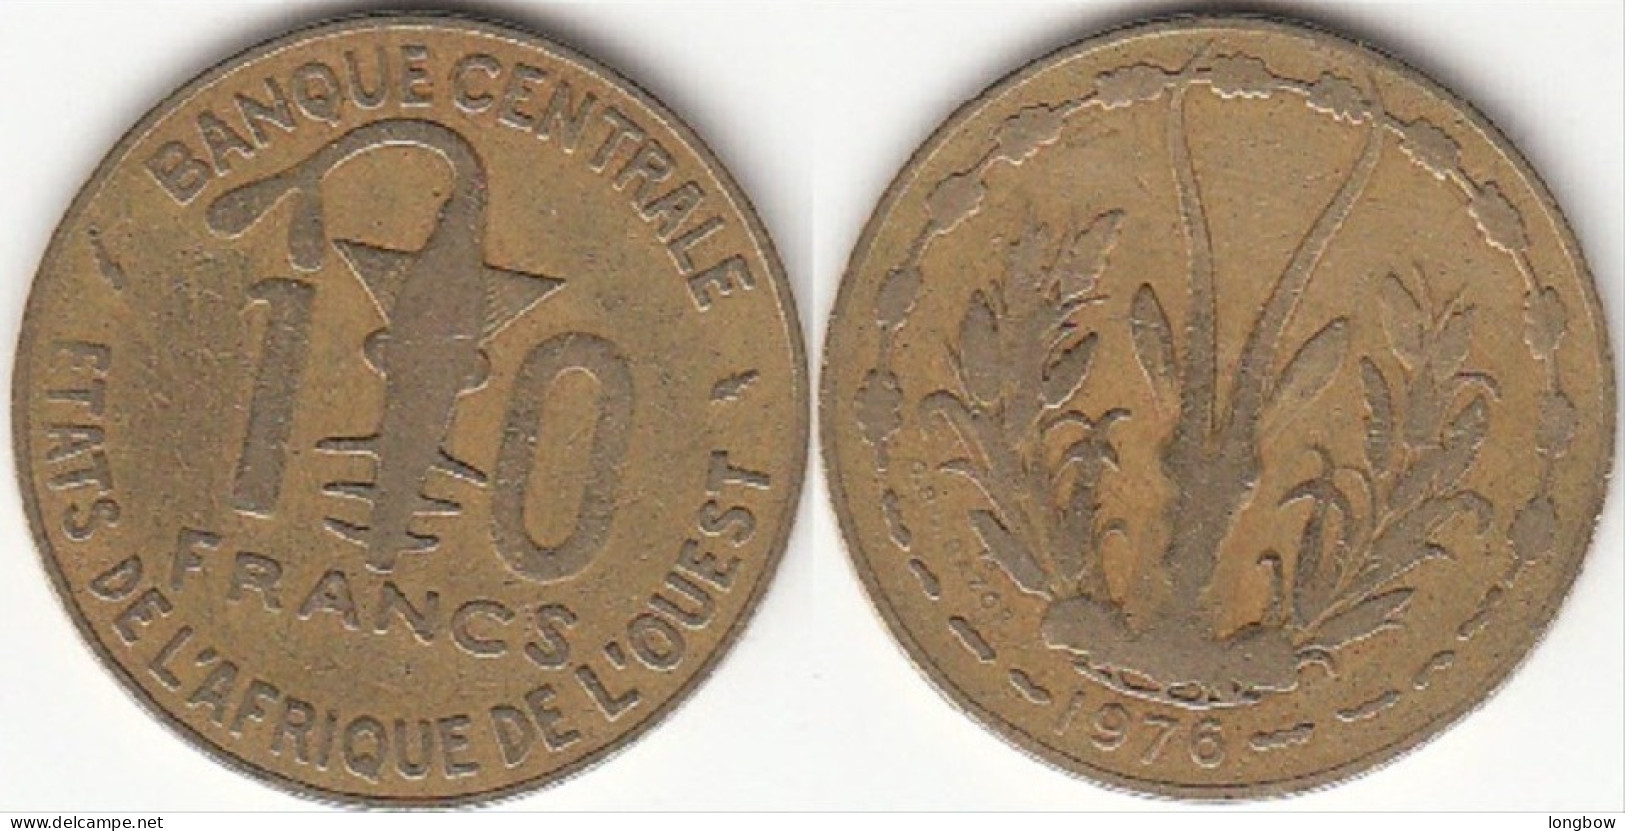 REP.CENTRO AFRICANA 10 CAF Francs 1976 KM#1a - Used - Zentralafrik. Republik